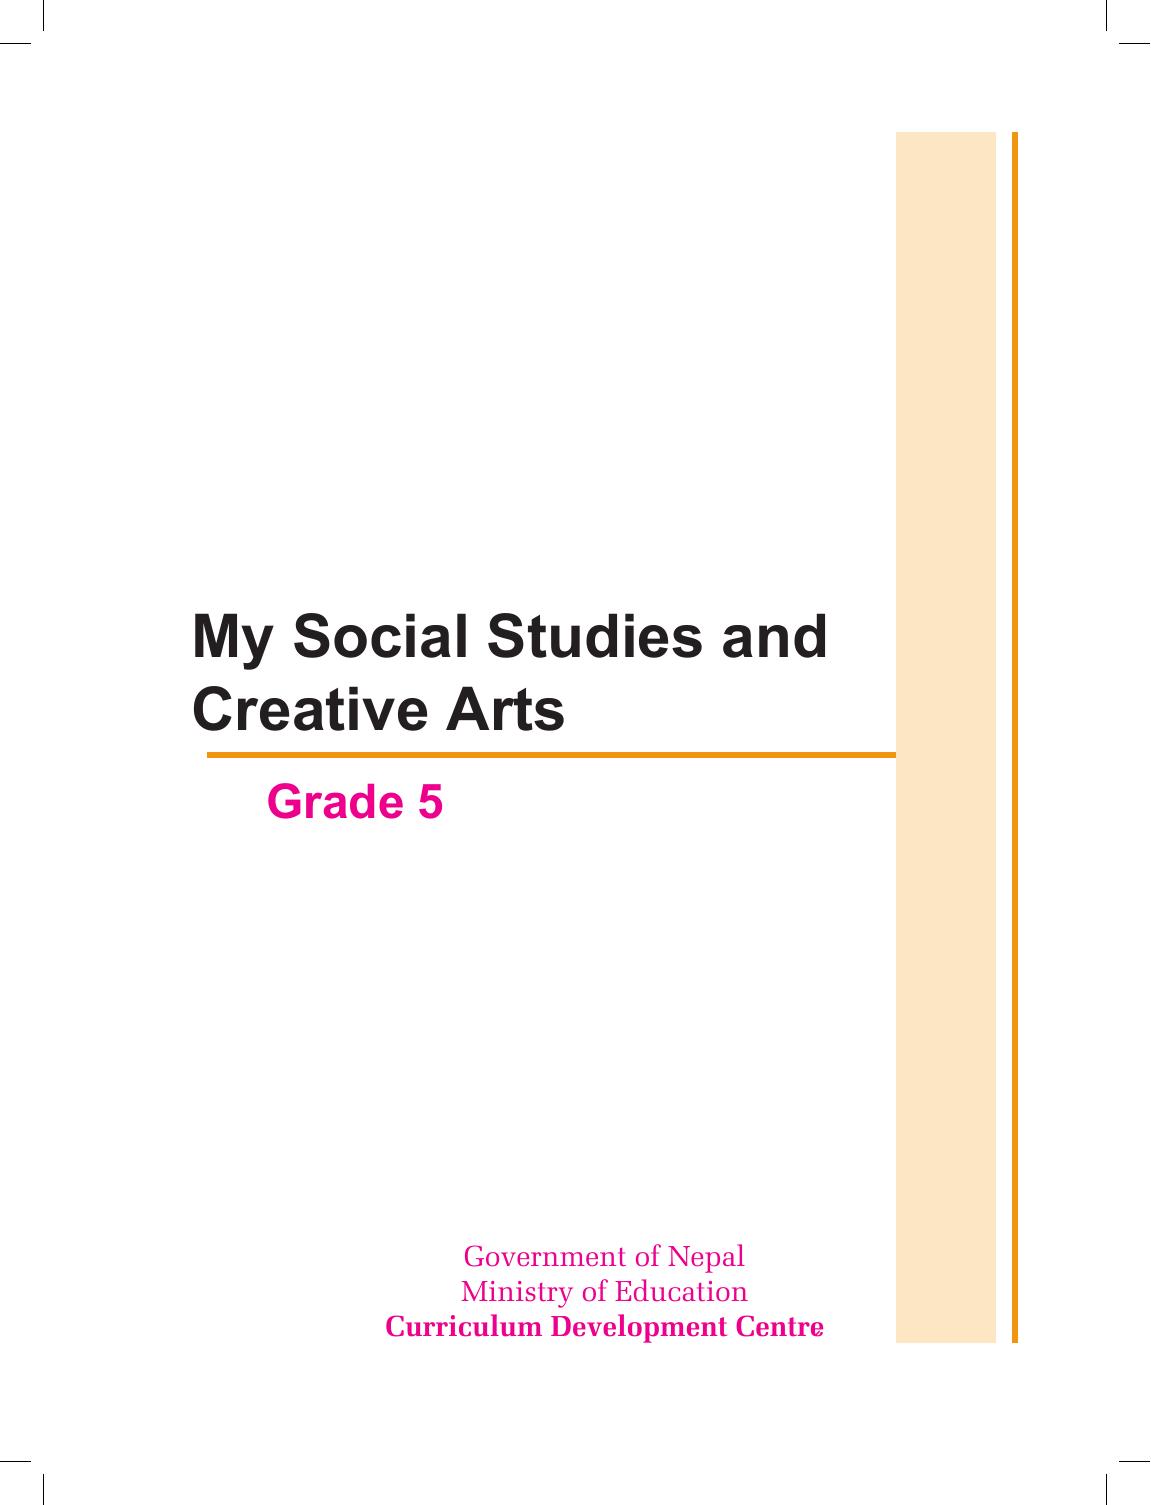 CDC 2018 - My Social Studies and Creative Arts Grade 5